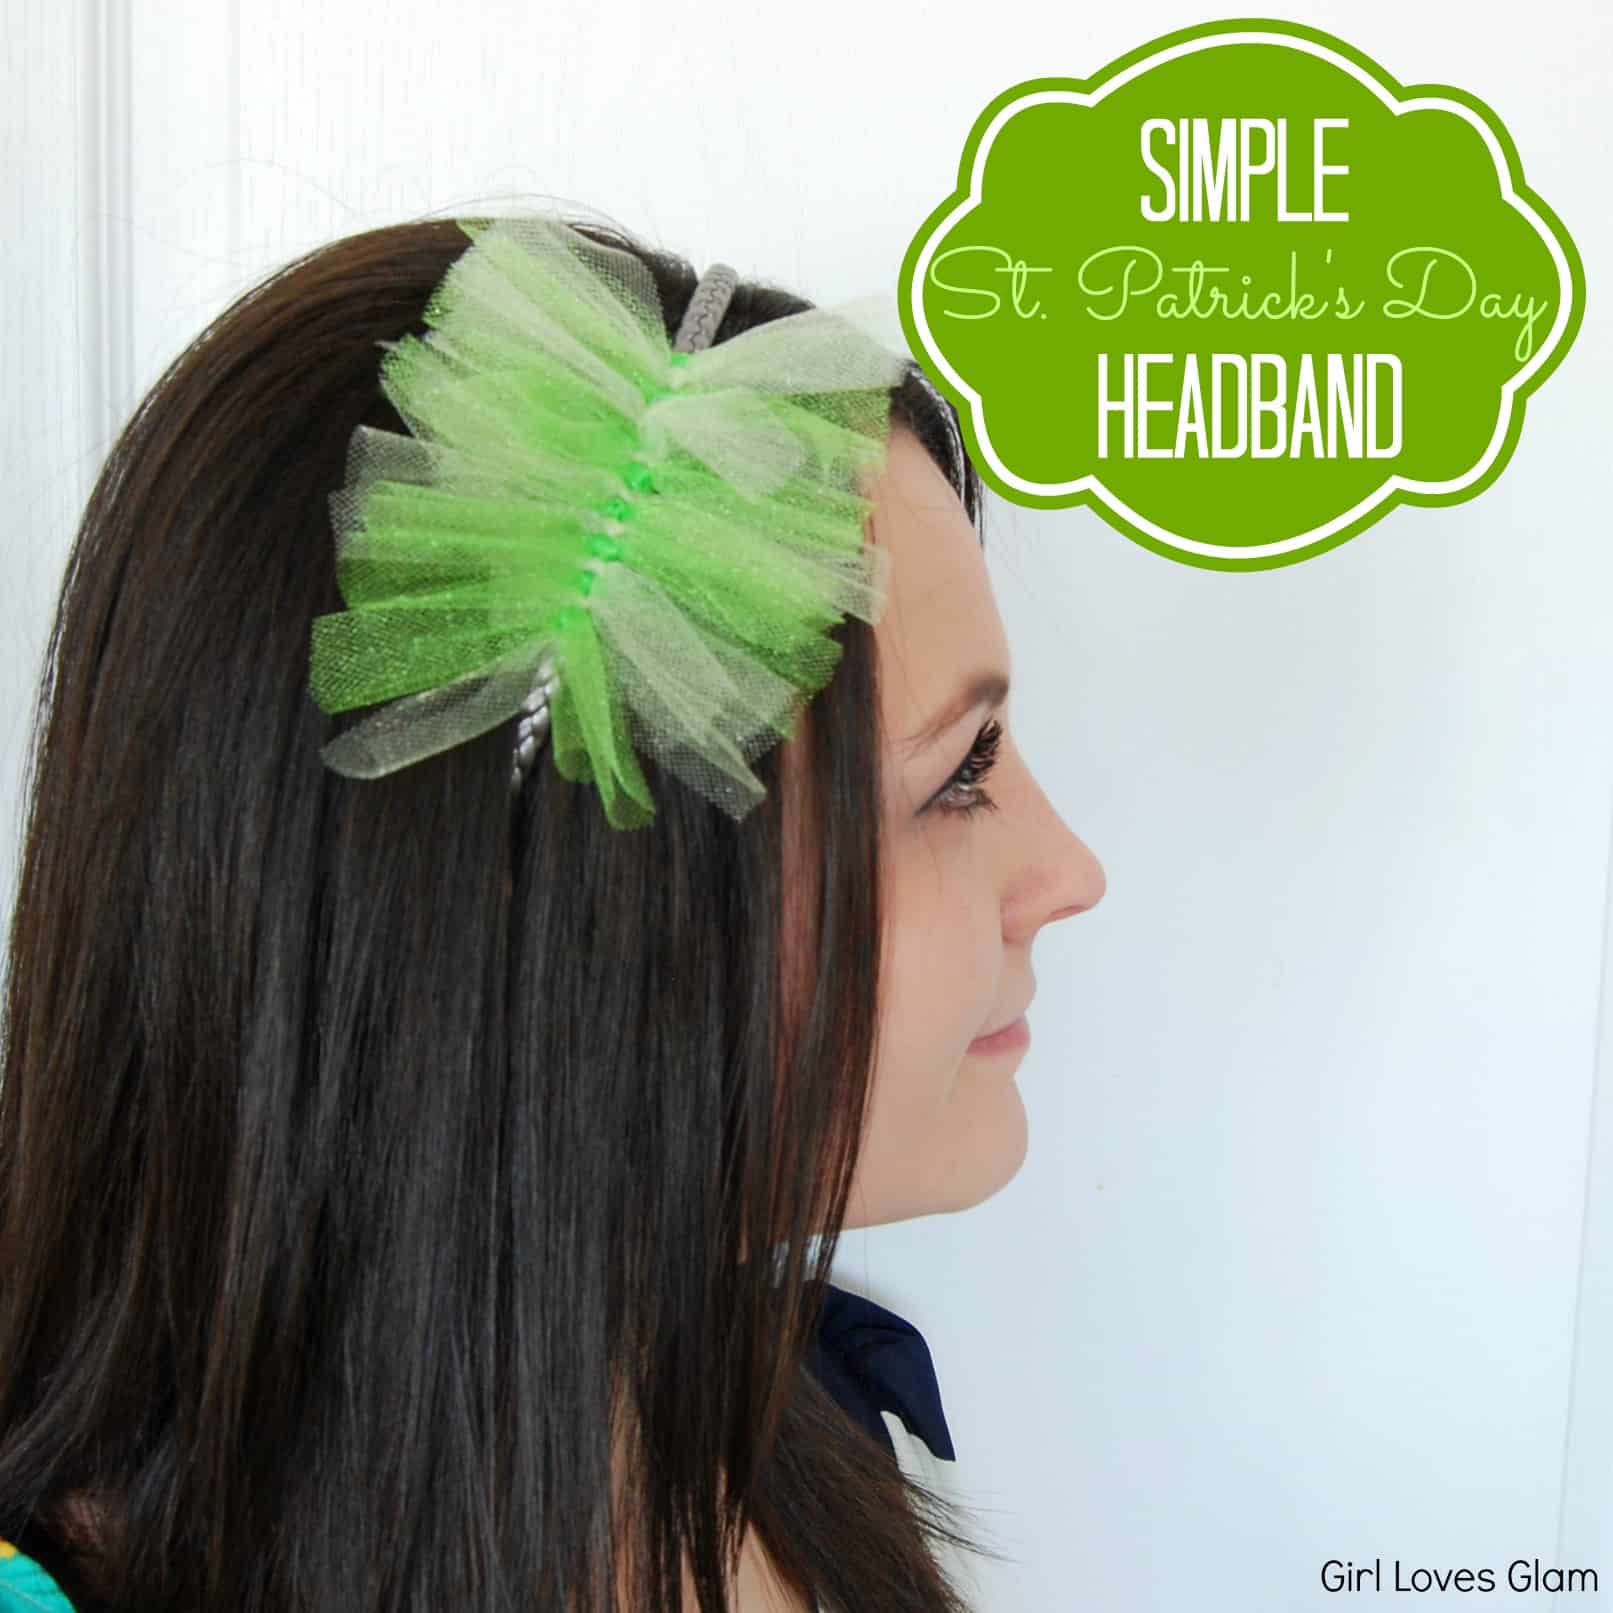 Simple St. Patrick's Day Headband Tutorial on www.girllovesglam.com #diy #tutorial #accessory